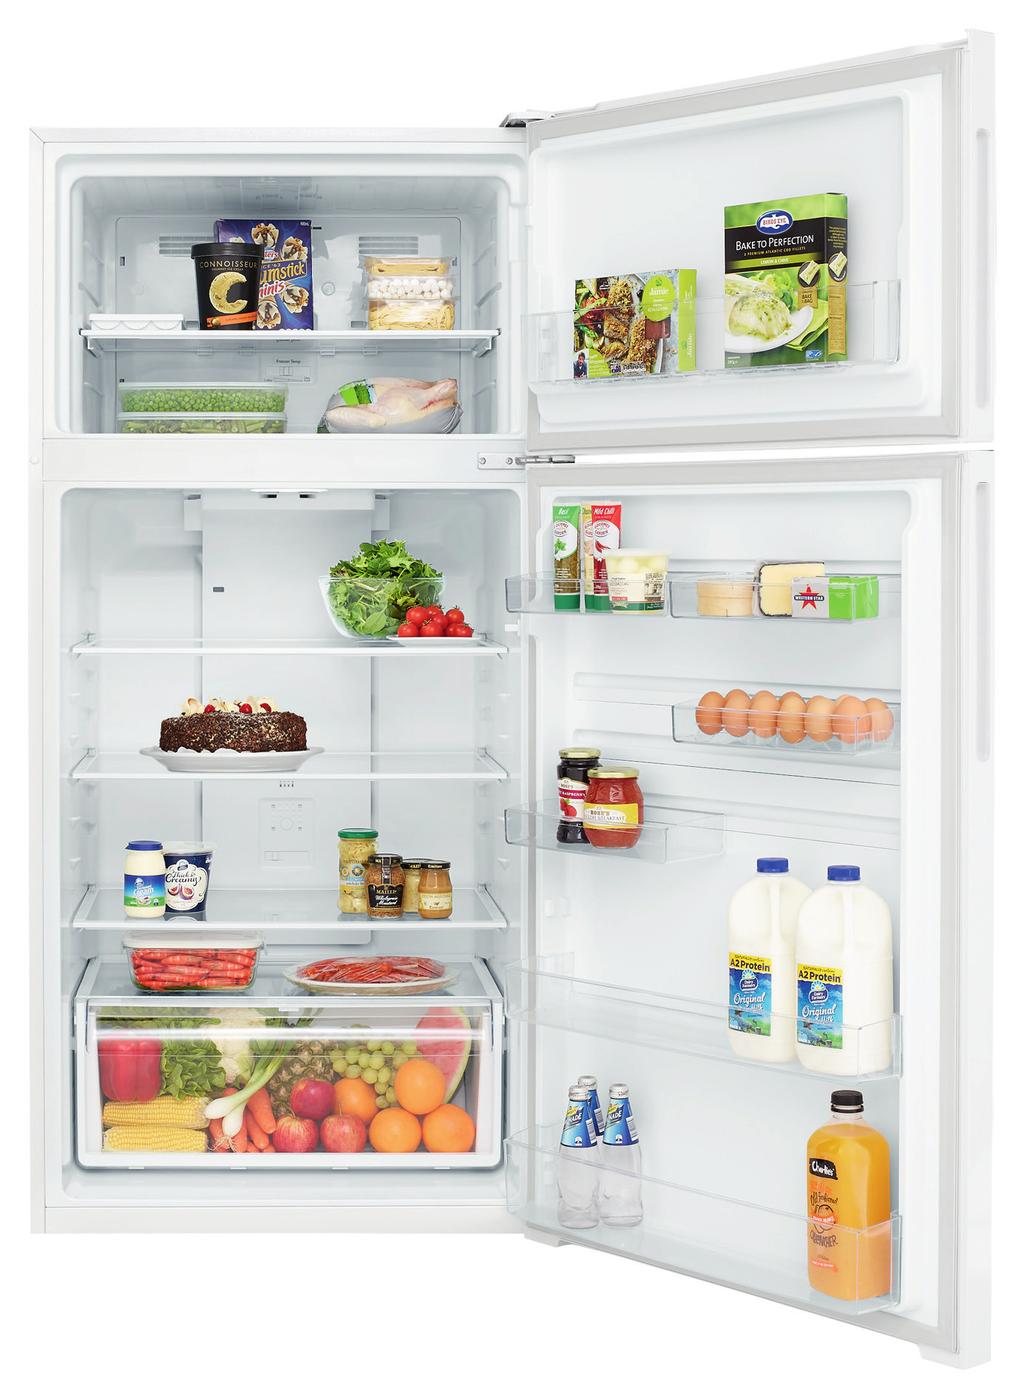 temperature controls for fridge and freezer Easy clean interiors KTM0WA KTM0WA total gross capacity (litres) 0 food compartment capacity (litres) 9 freezer capacity (litres) 09 0 dimensions mm